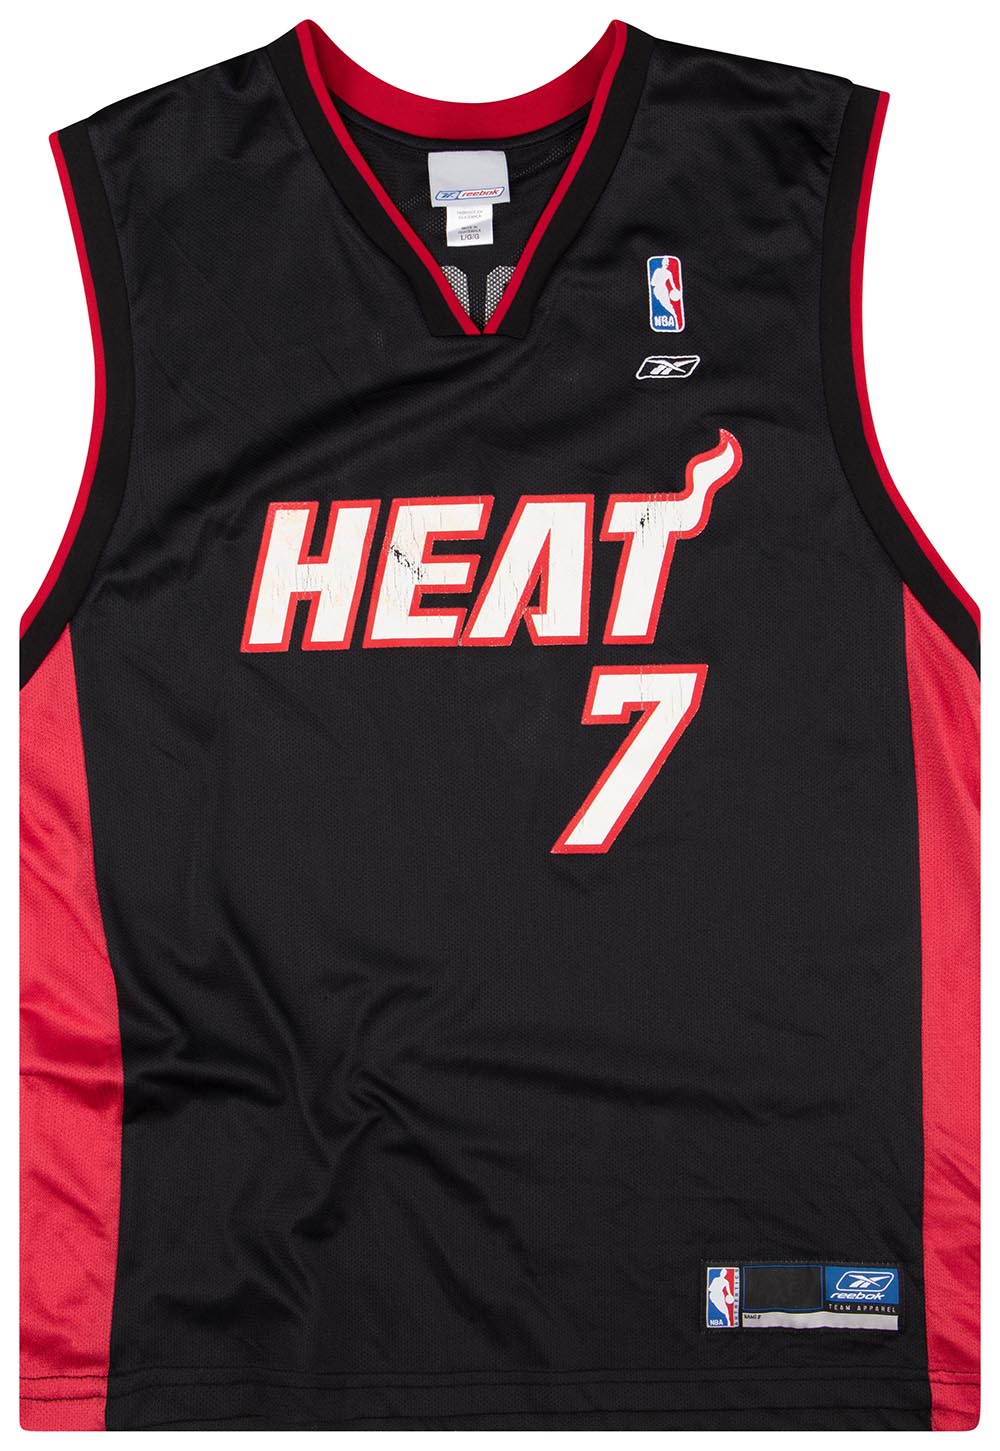 Miami Heat Jerseys in Miami Heat Team Shop 